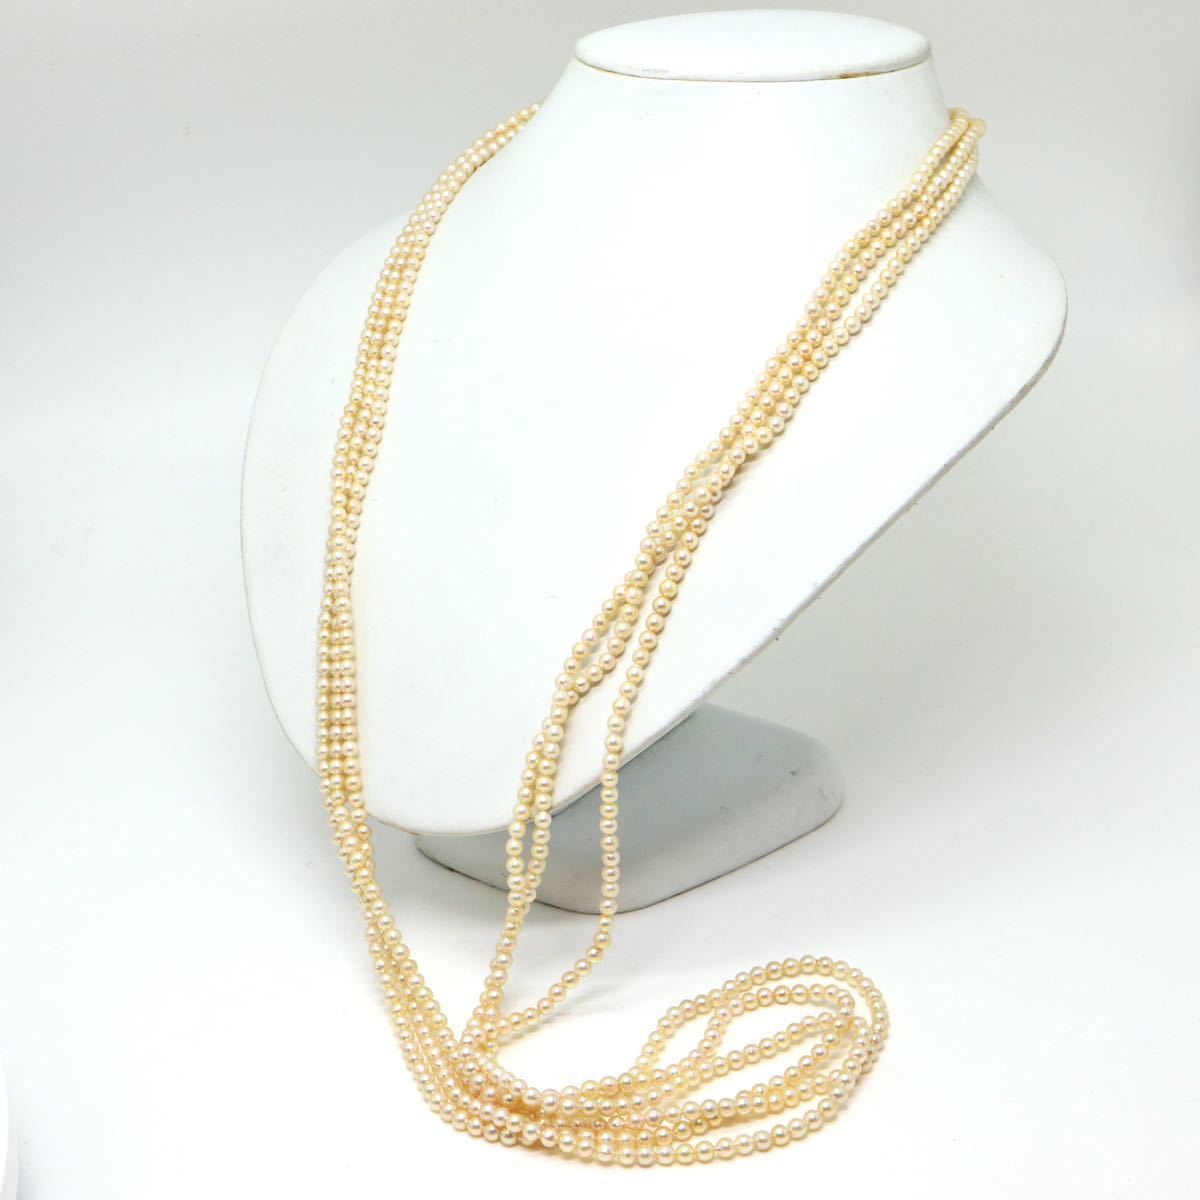 《K18(750)天然ダイヤモンド付きアコヤ本真珠ベビーパール3連ネックレス》J 3.5-4.0mm珠 56.5g 92.5cm pearl necklace jewelry EB1/EE1_画像3